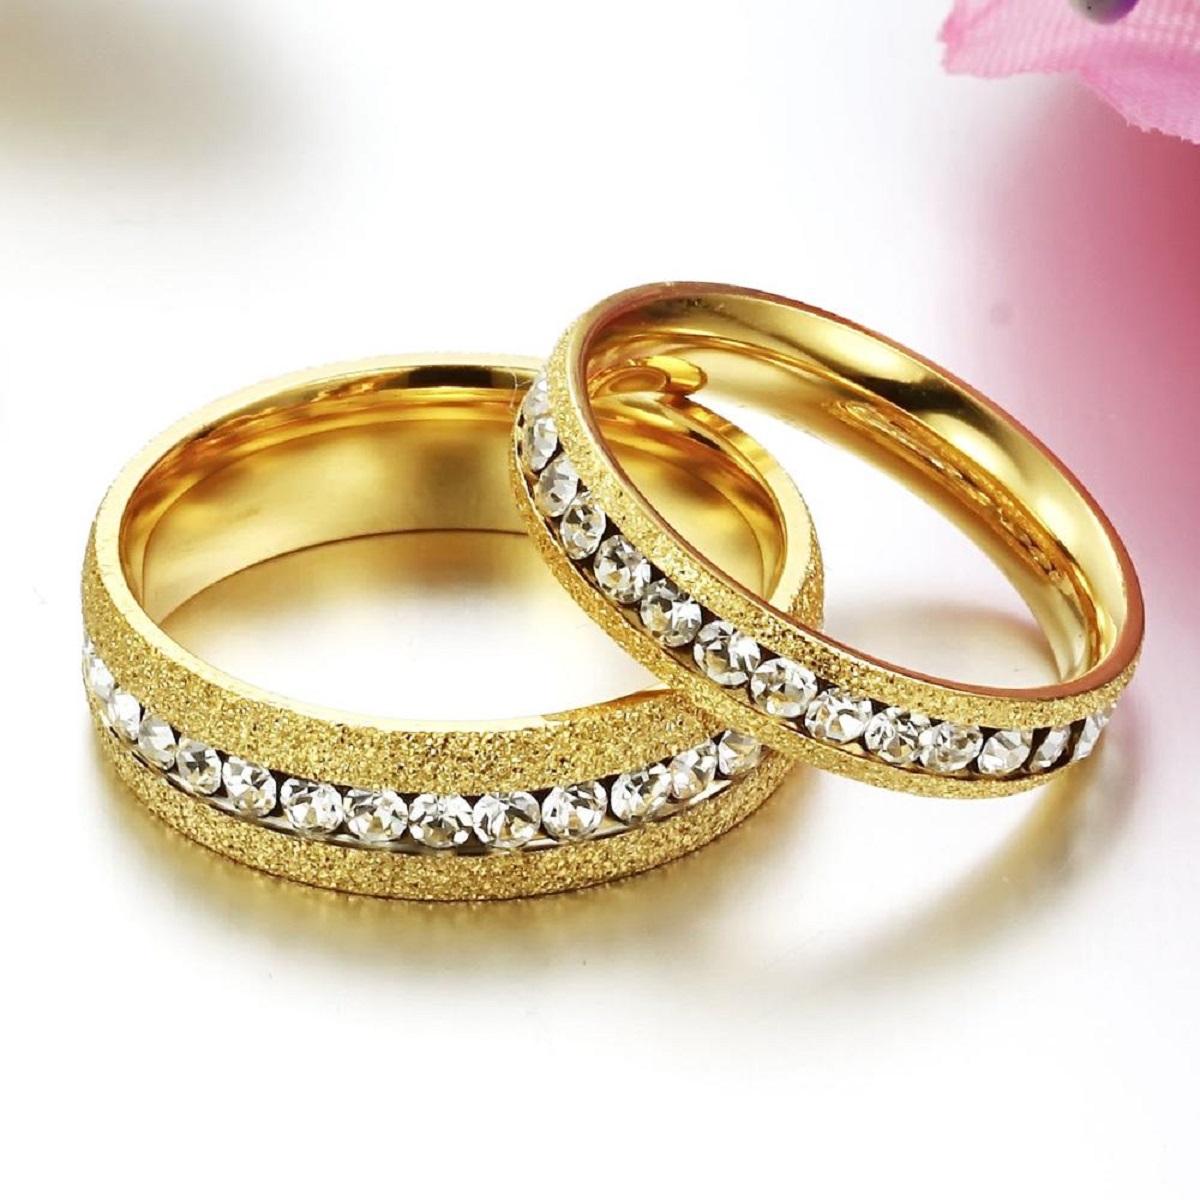 Couples wedding rings set - AI1019 – JEWELLERY GRAPHICS